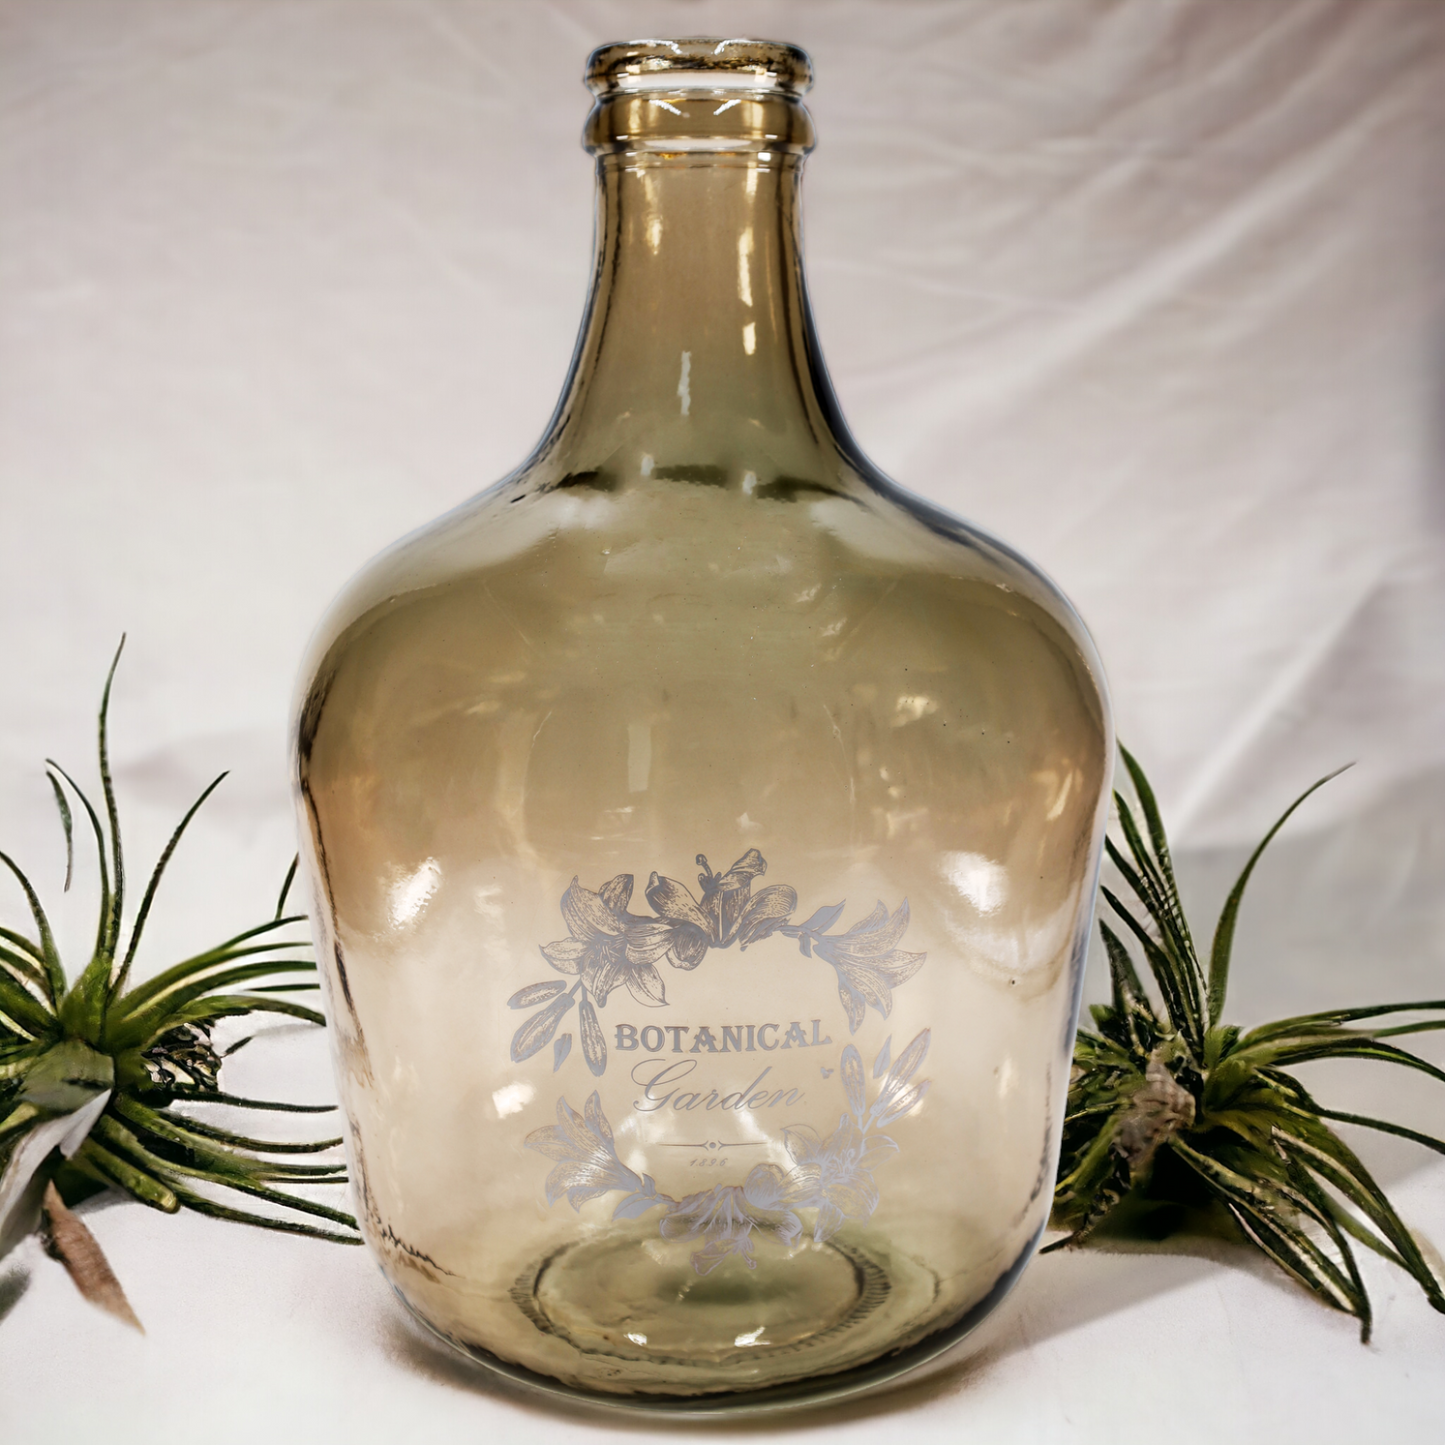 Vase natural  "Botanical" antik 42 cm mit Aufschrift braun